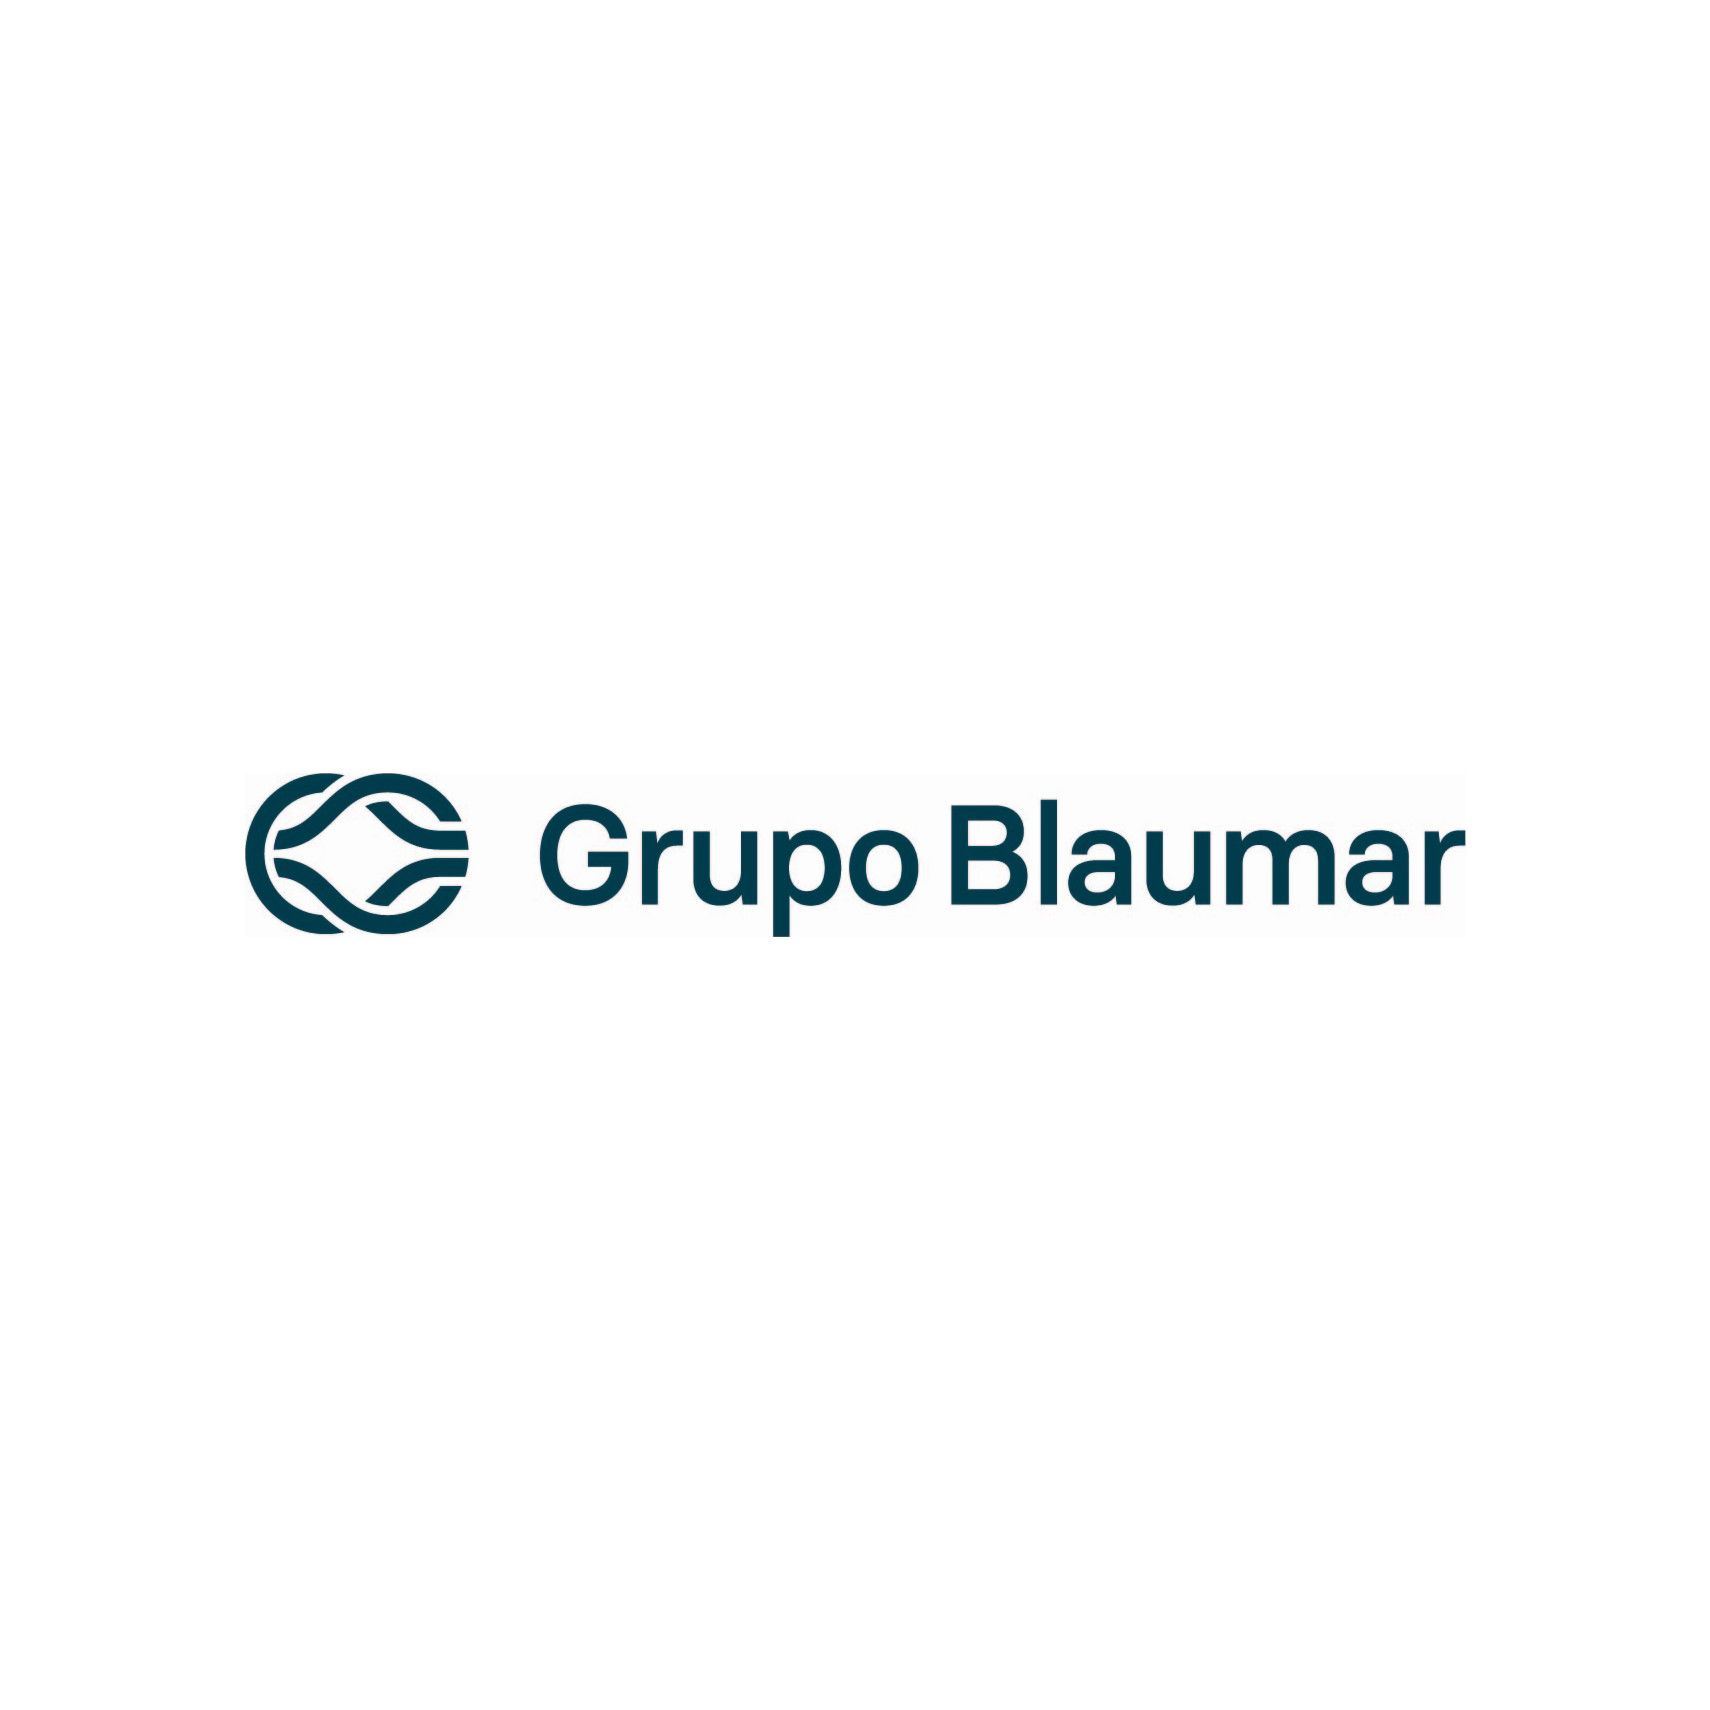 Grupo Blaumar